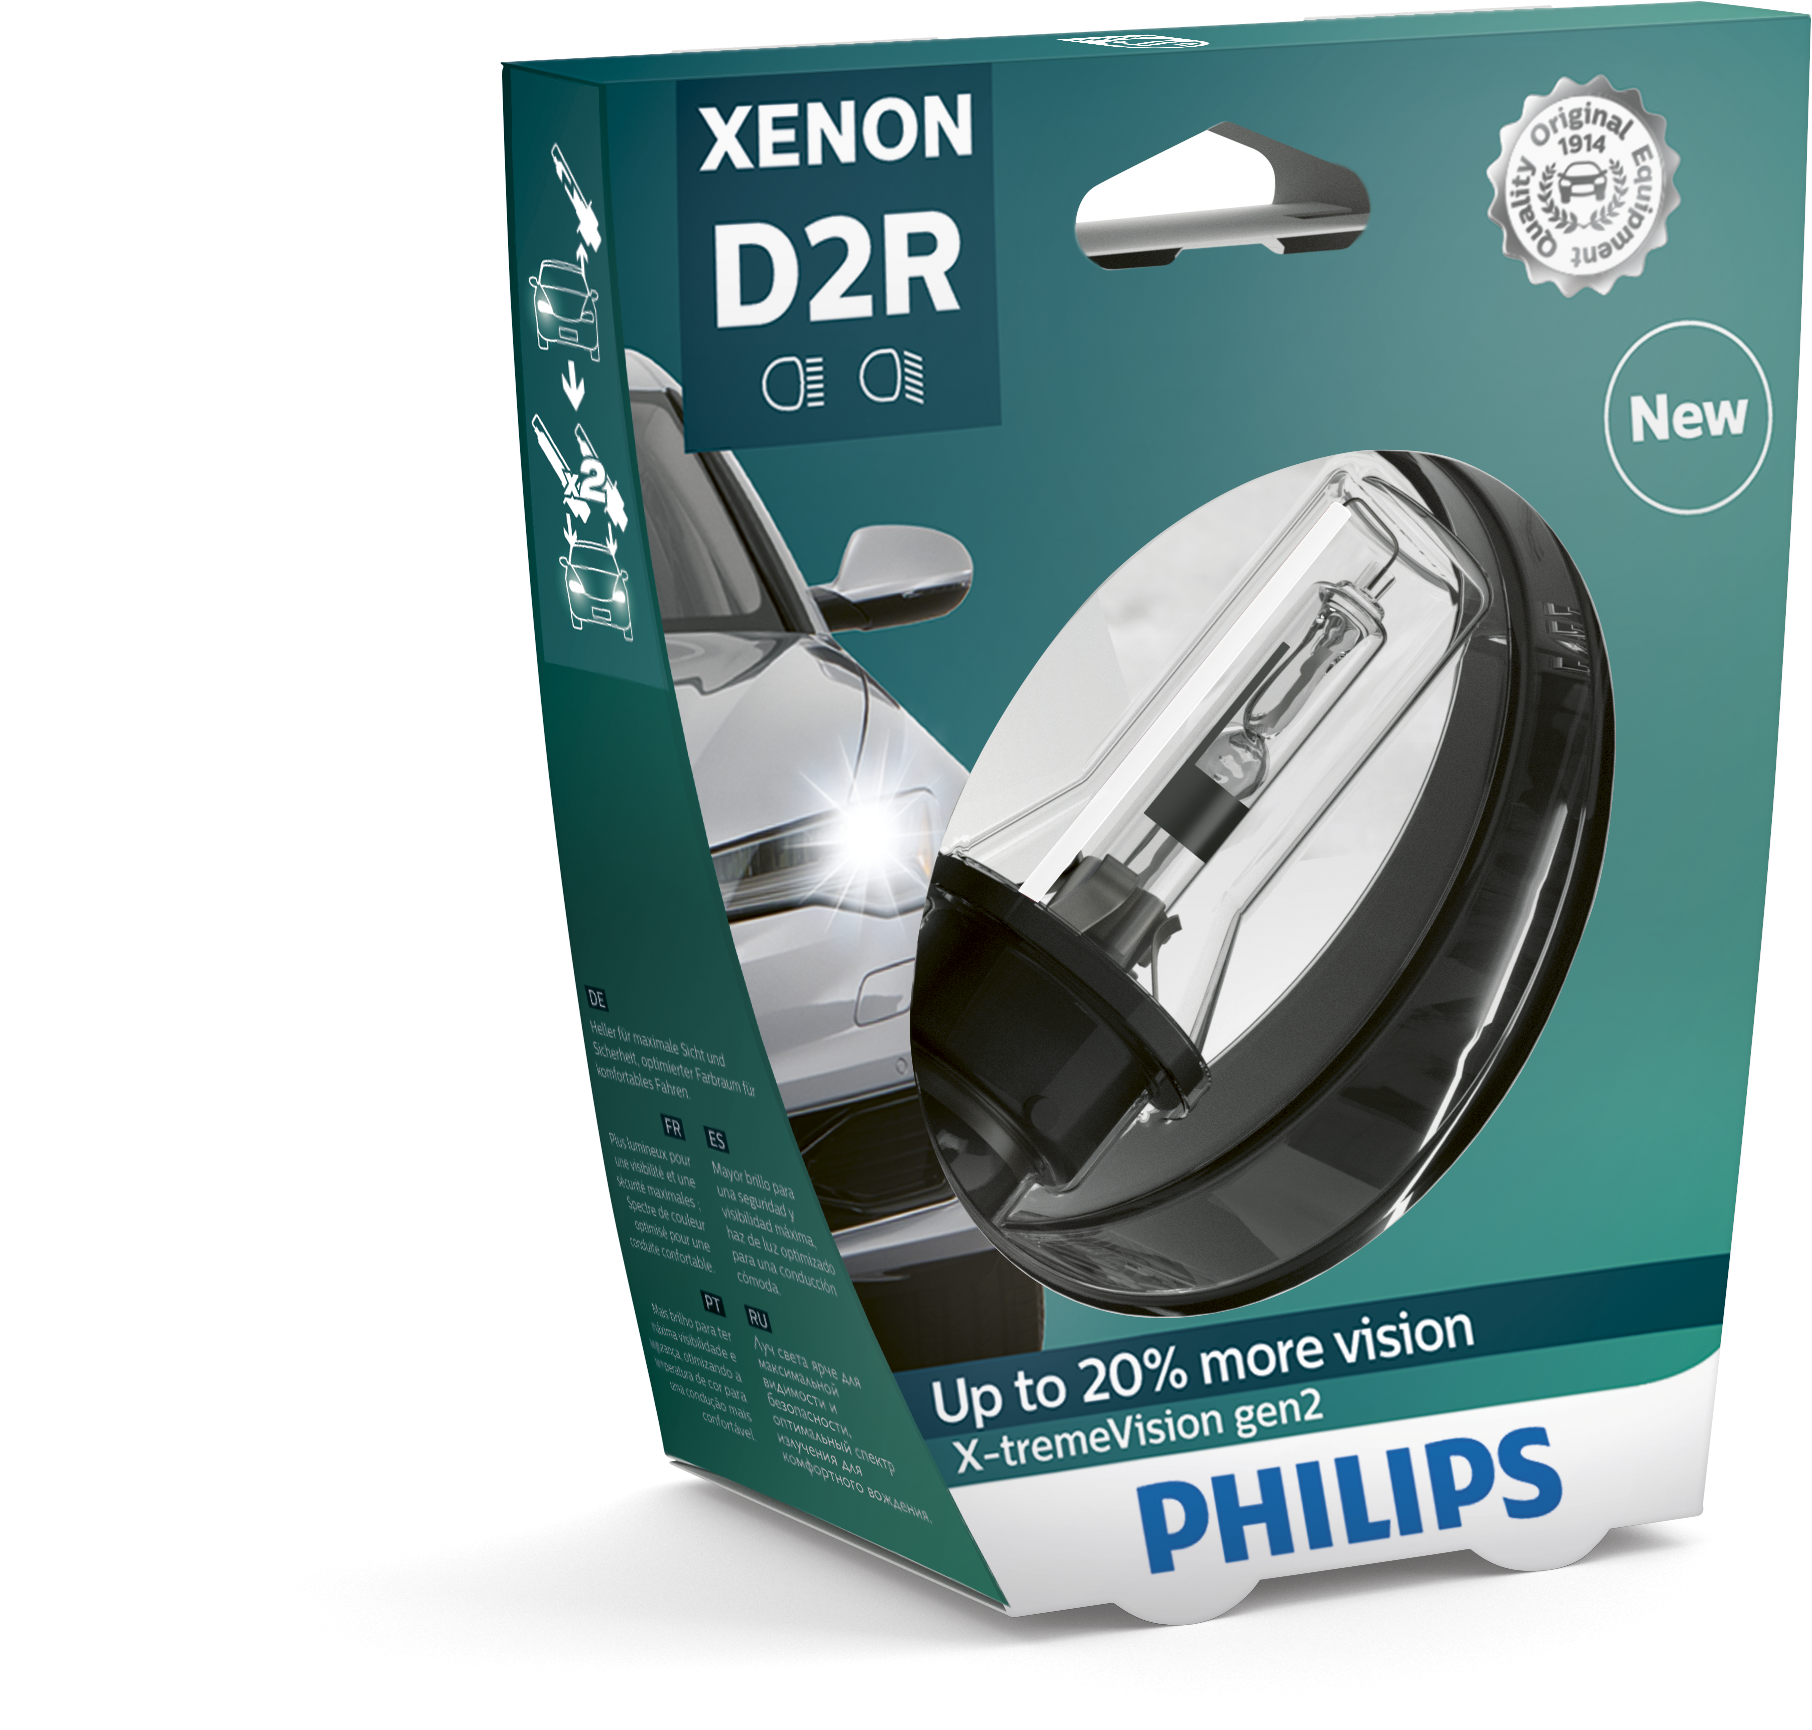 Philips D2R X-tremeVision gen2 85126XV2S1